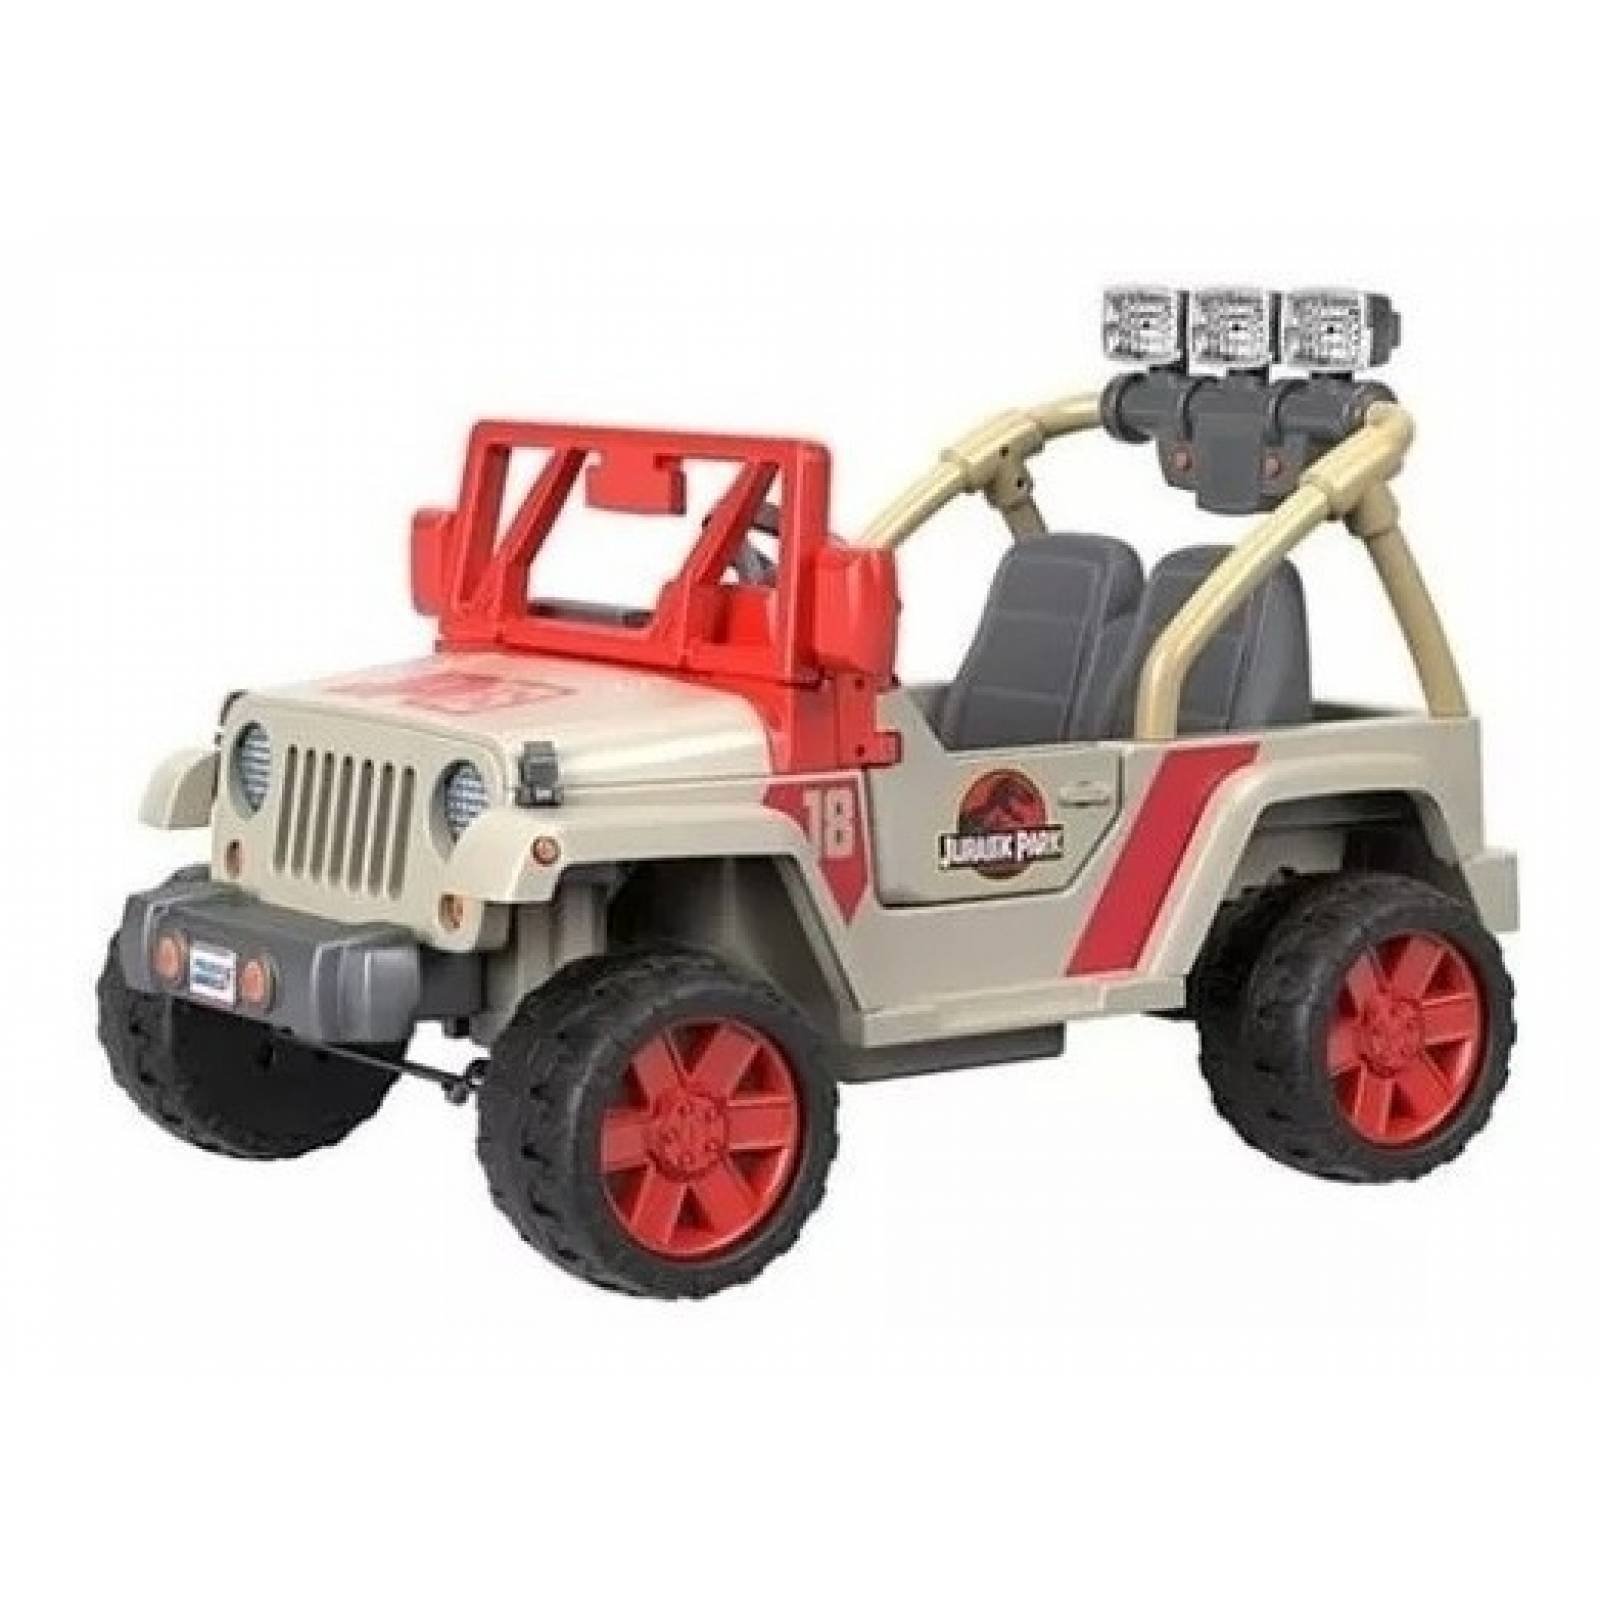 Fisher-Price Ride On Power Wheels Jurassic Park Jeep Wrangler